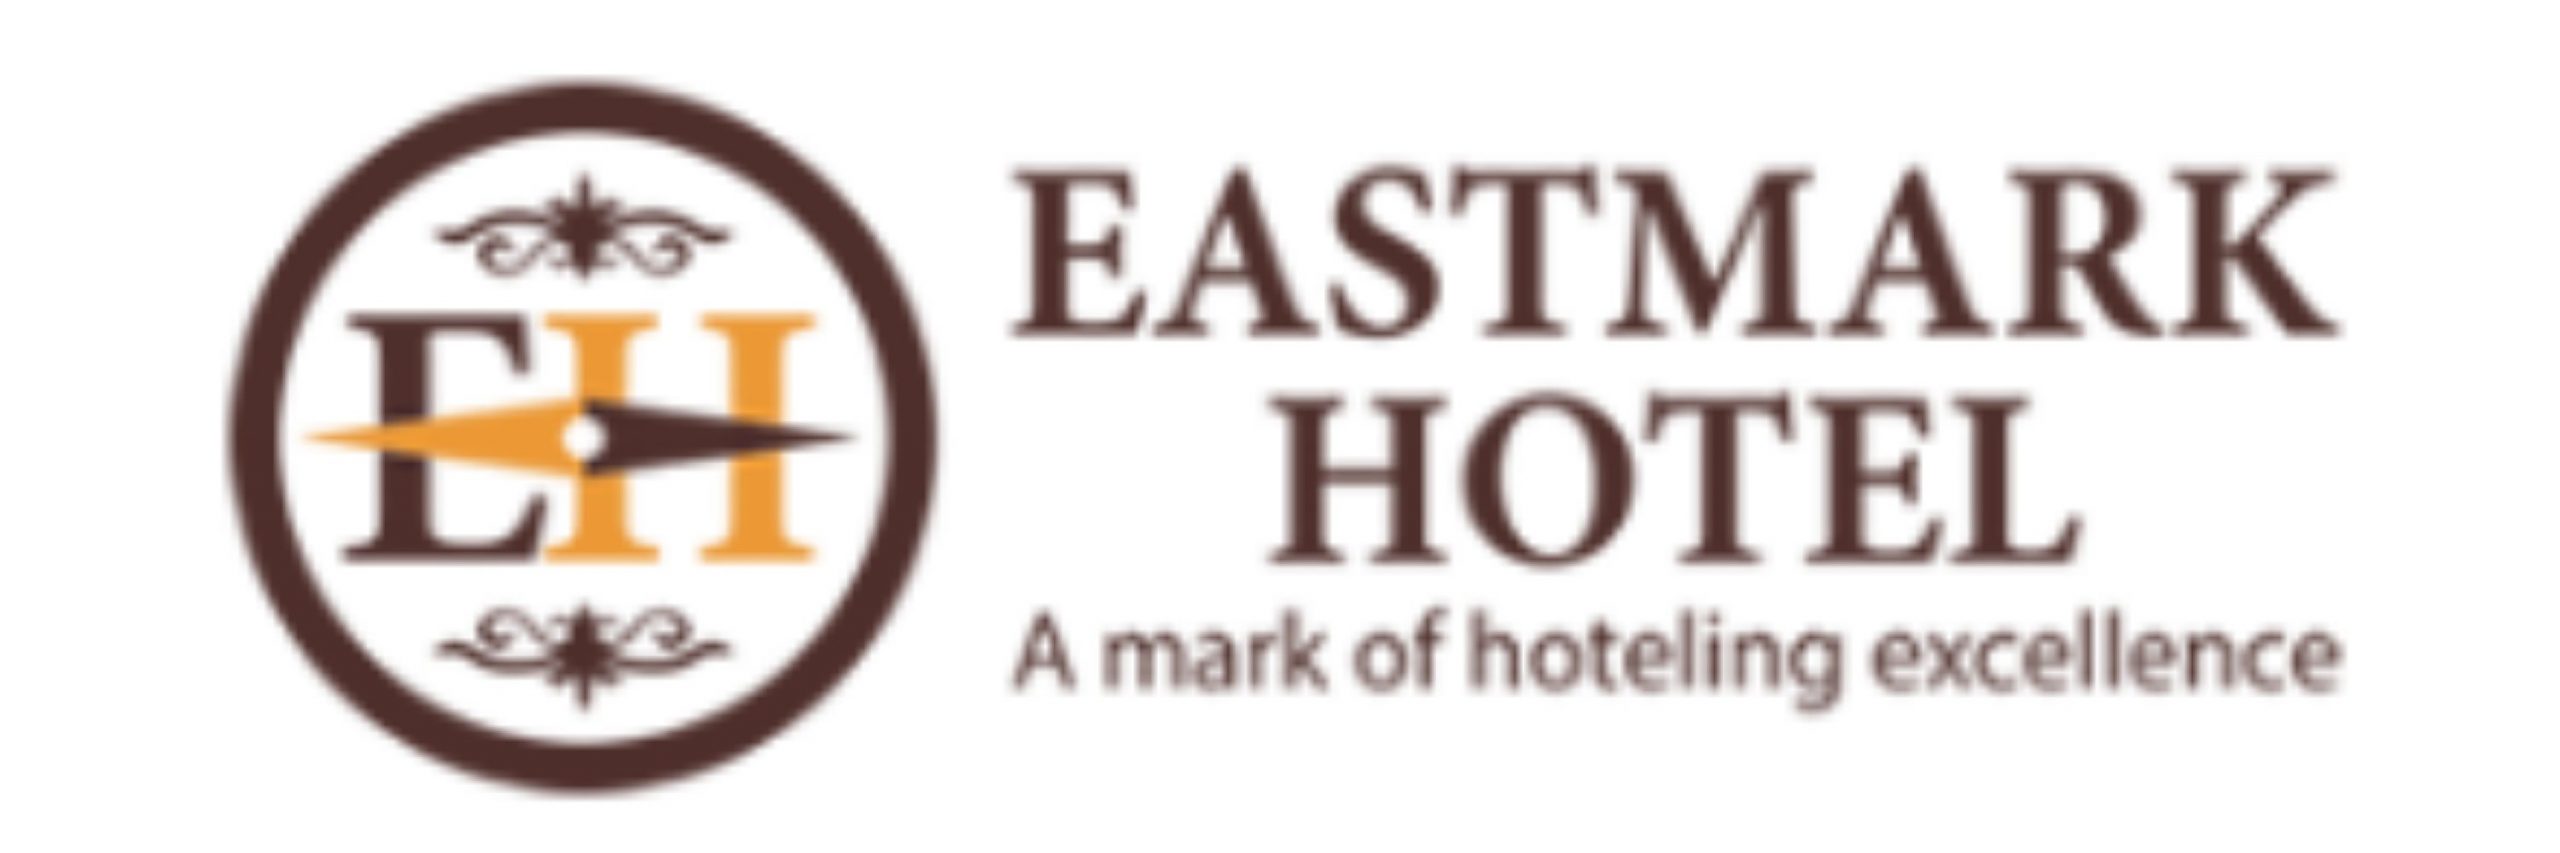 Eastmark Hotel |   Contact Us